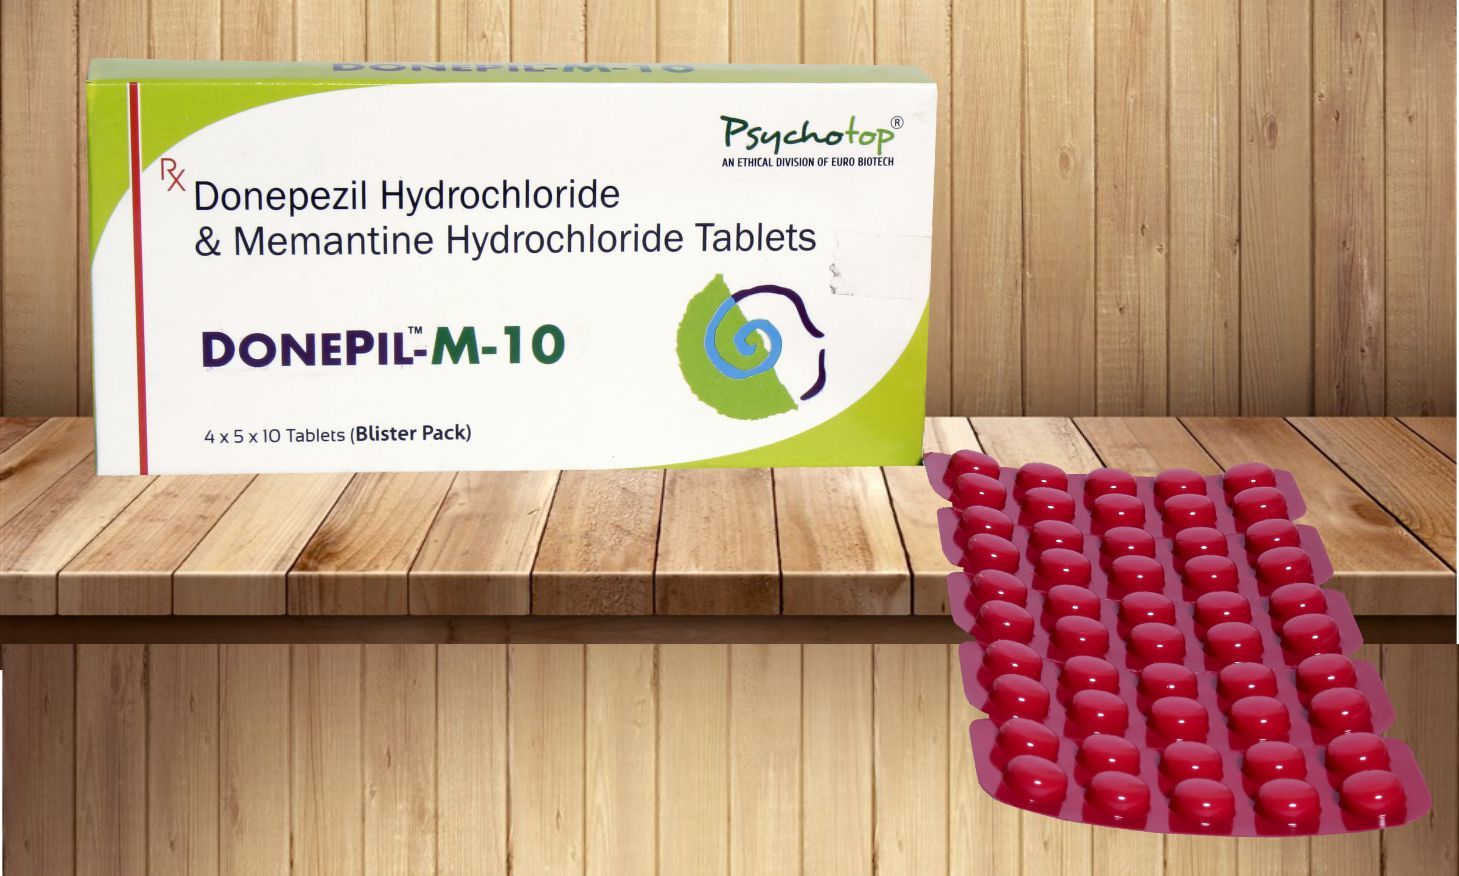 Donepzil Hcl 5 mg & Memantine 5 mg /10 mg